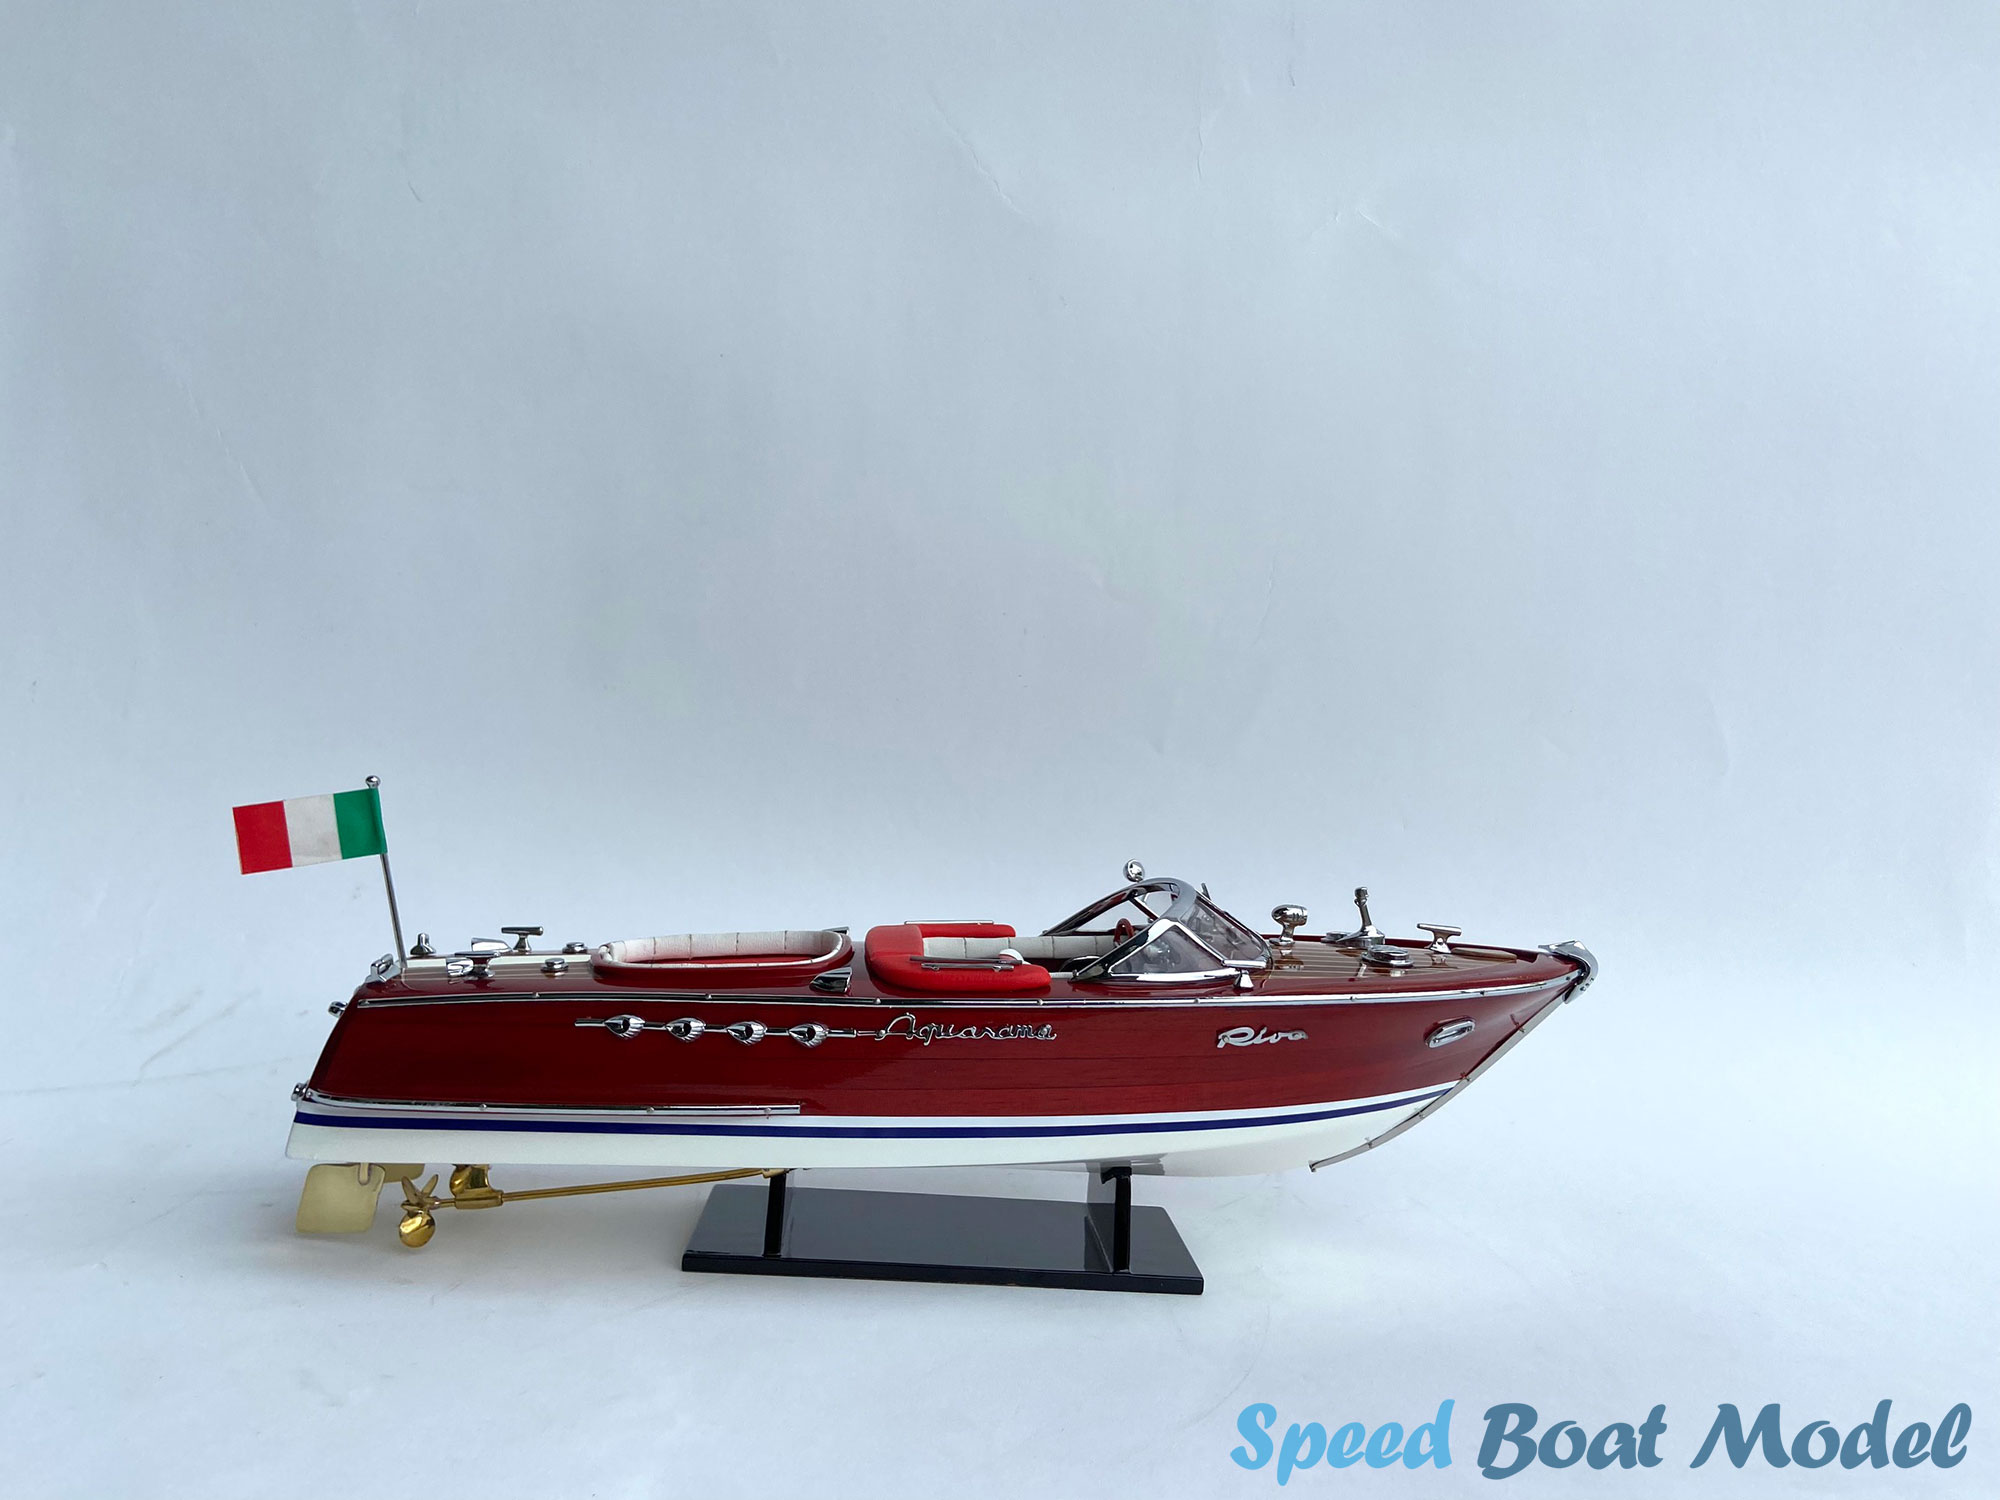 Red Super Riva Aquarama Classic Boat Model 34.2"